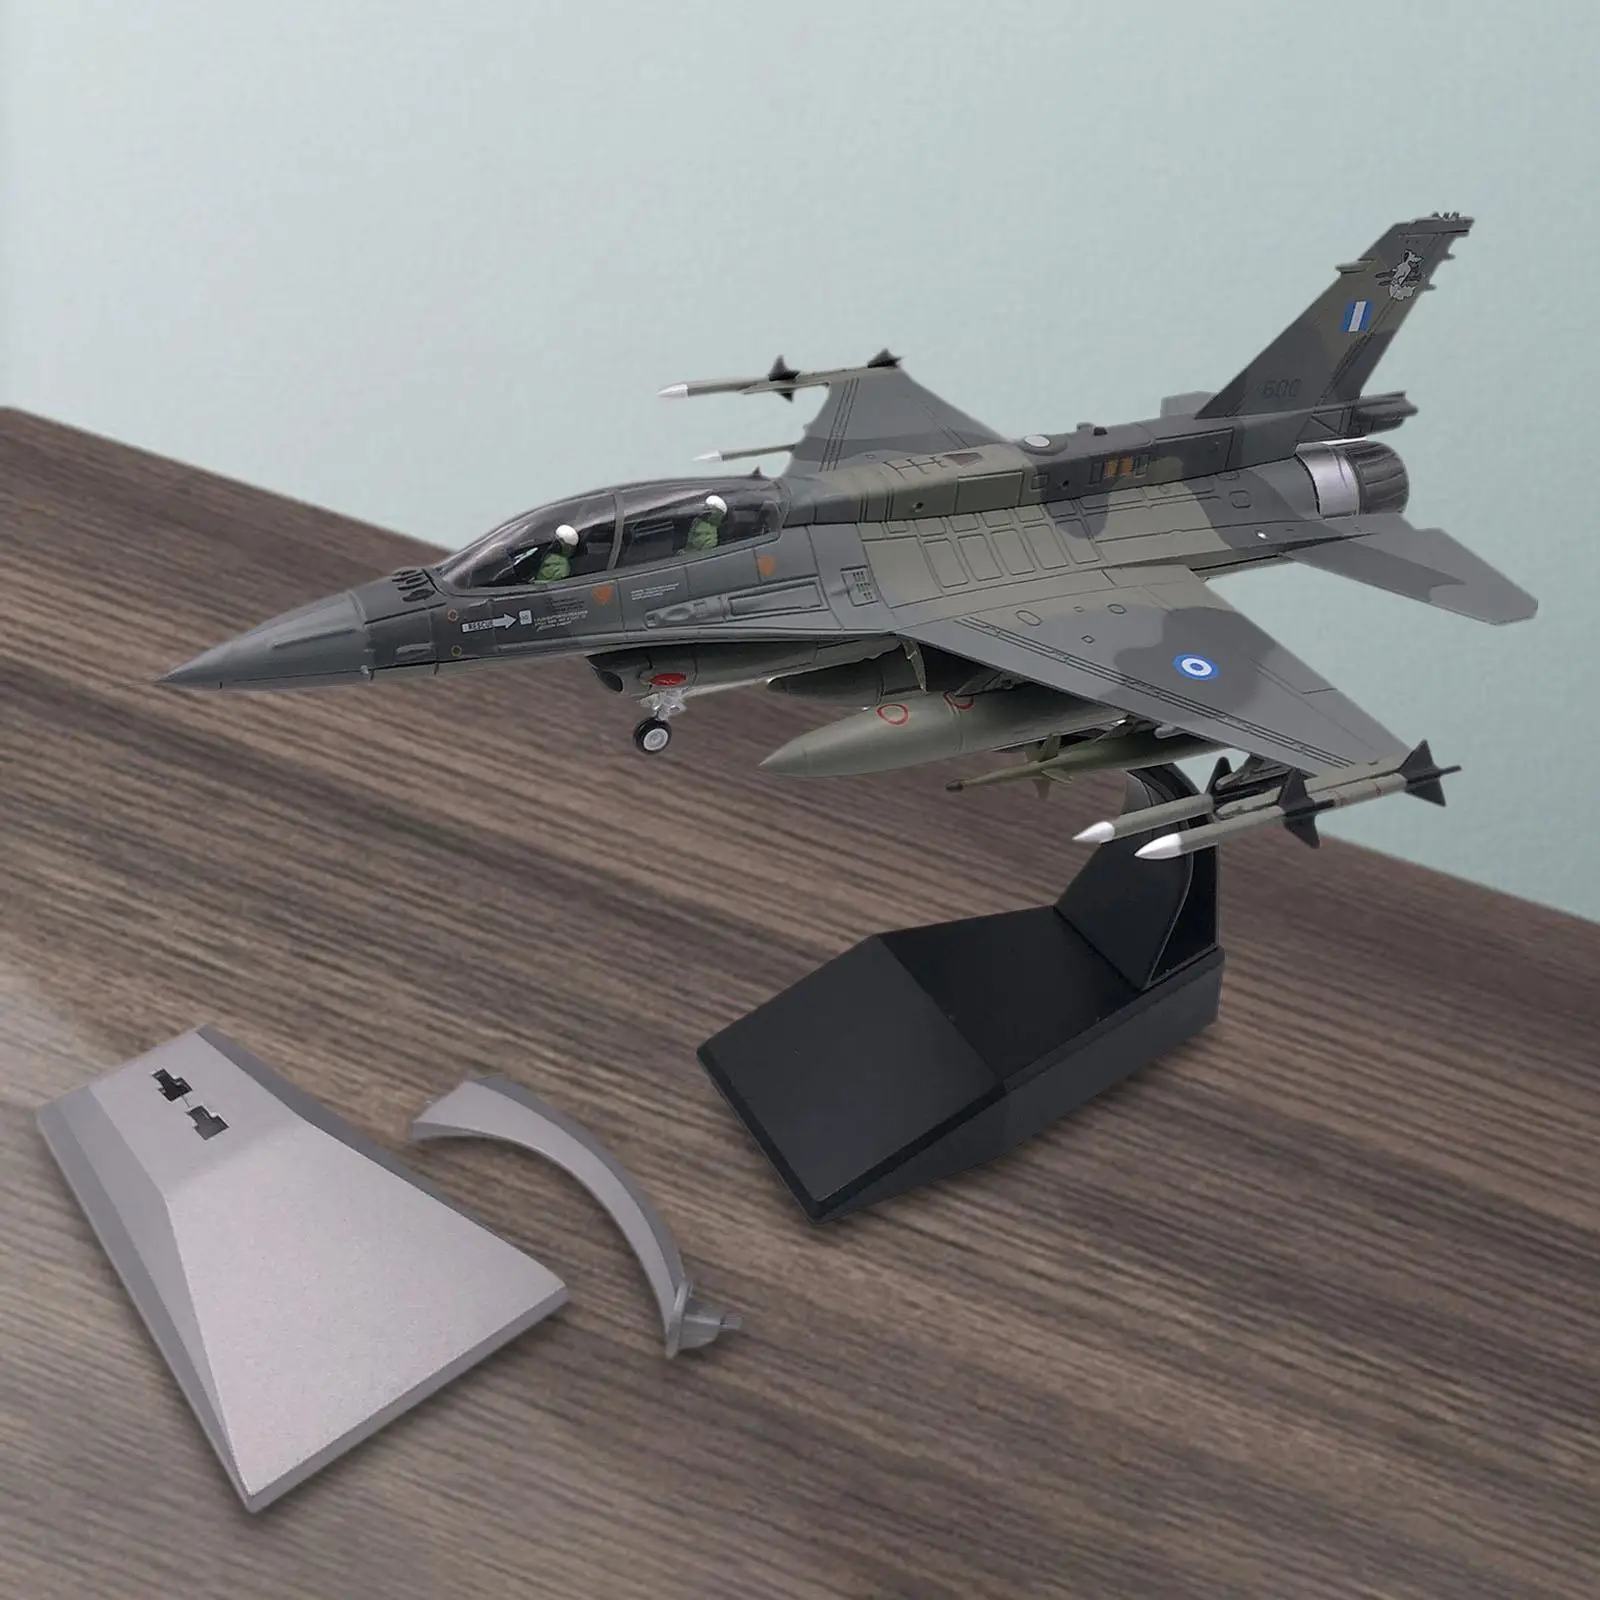 1/72 Scale F16D Fighter with Base Desktop Decoration Gift Aviation Commemorate Plane Model for Home Bedroom Office Shelf Bar